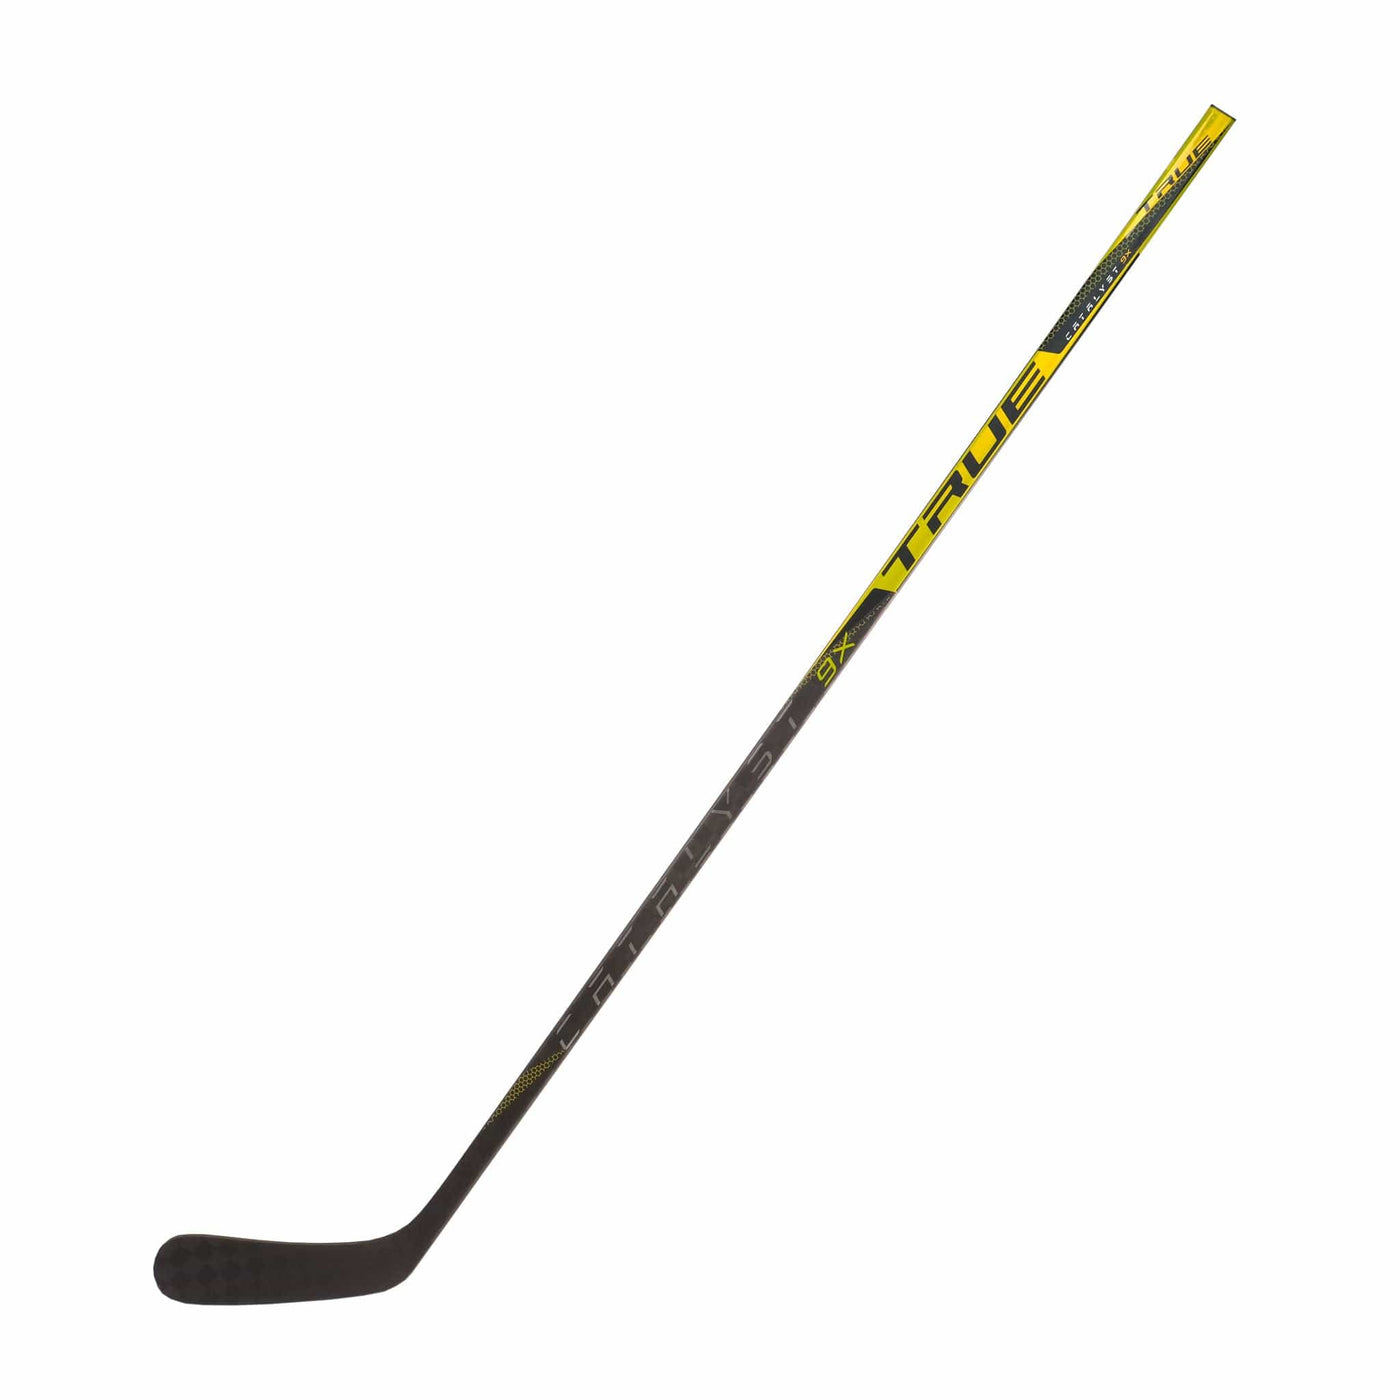 TRUE Catalyst 9X Pro Stock Senior Hockey Stick - Justin Faulk - TC2 - R-90 - The Hockey Shop Source For Sports